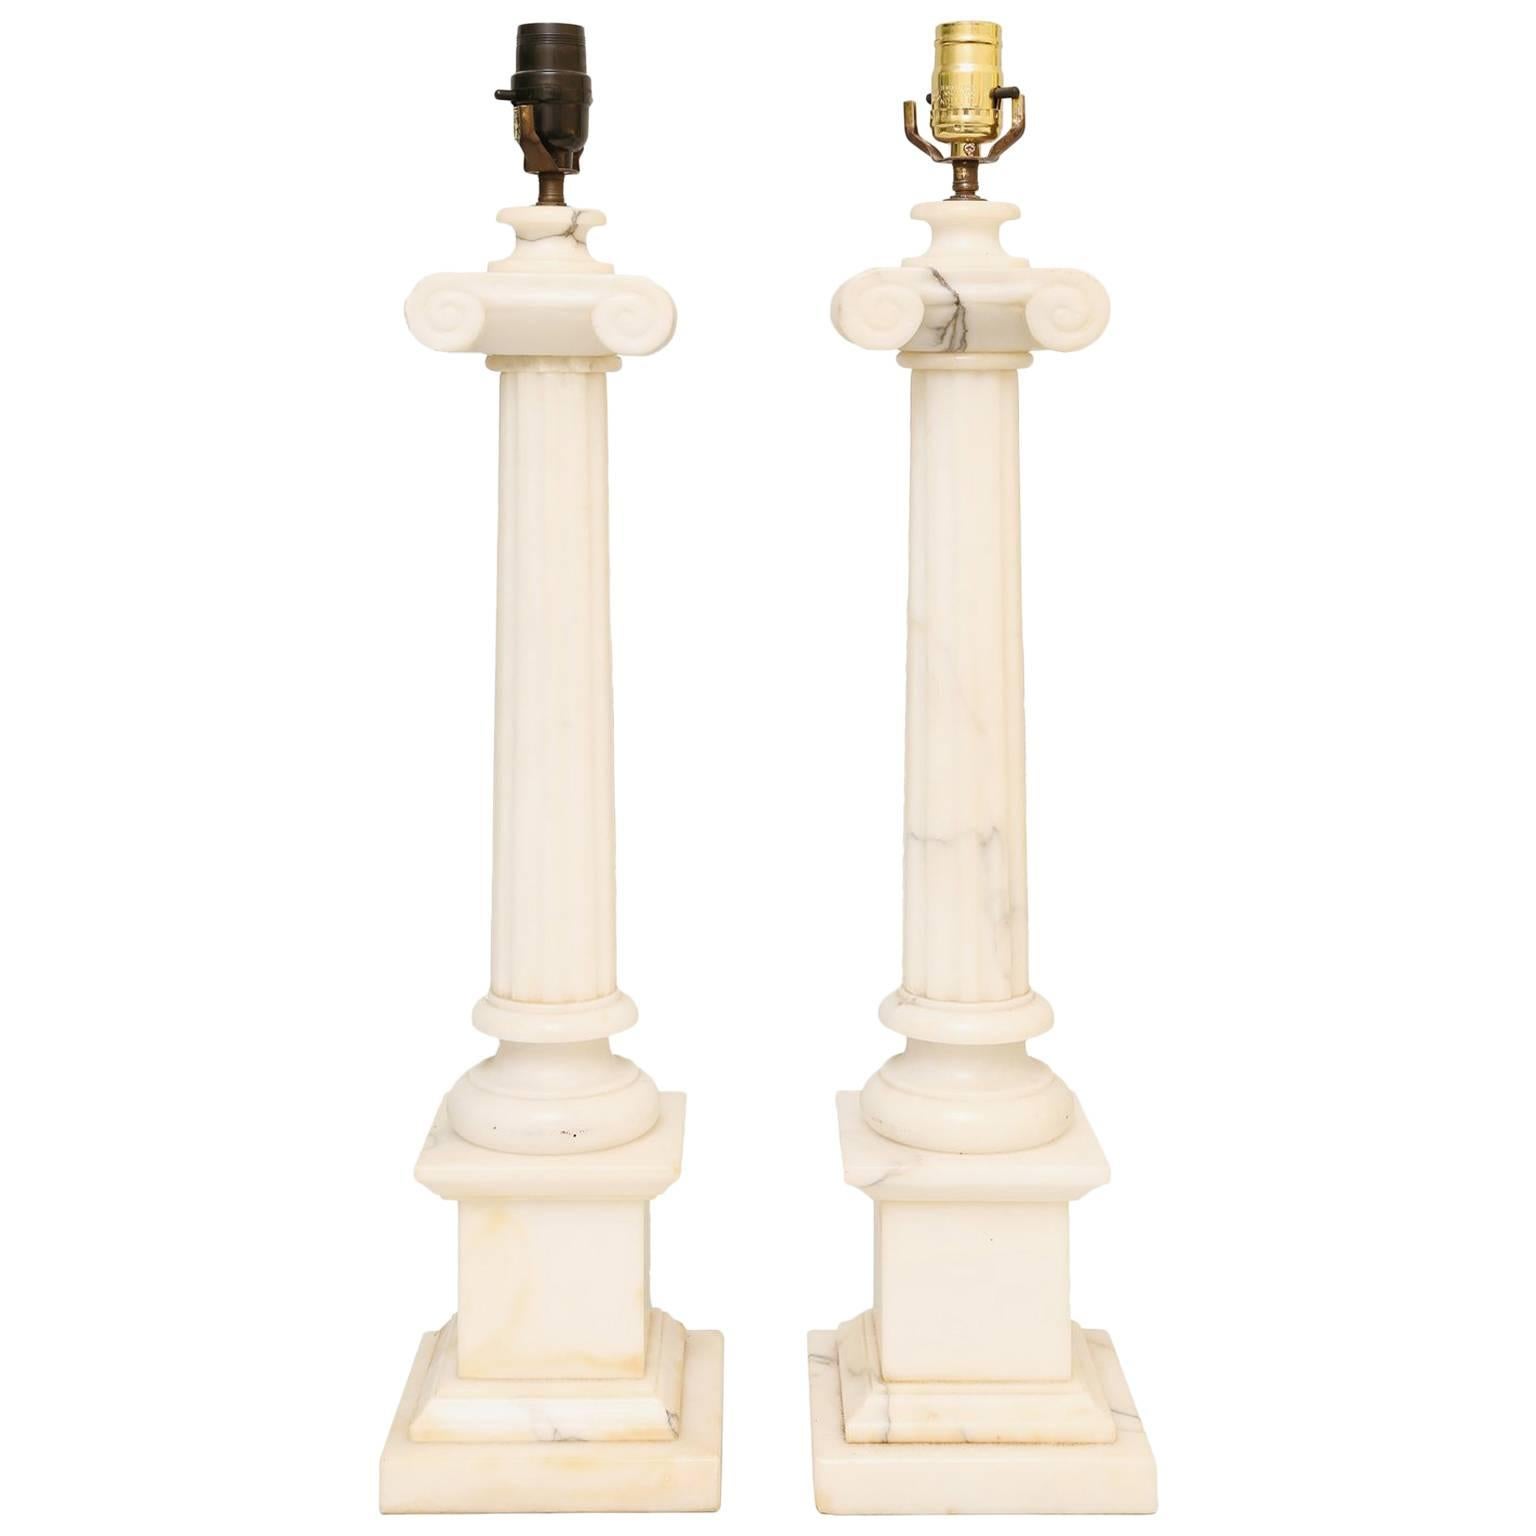 Pair of Carved Alabaster Columnar Form Table Lamps